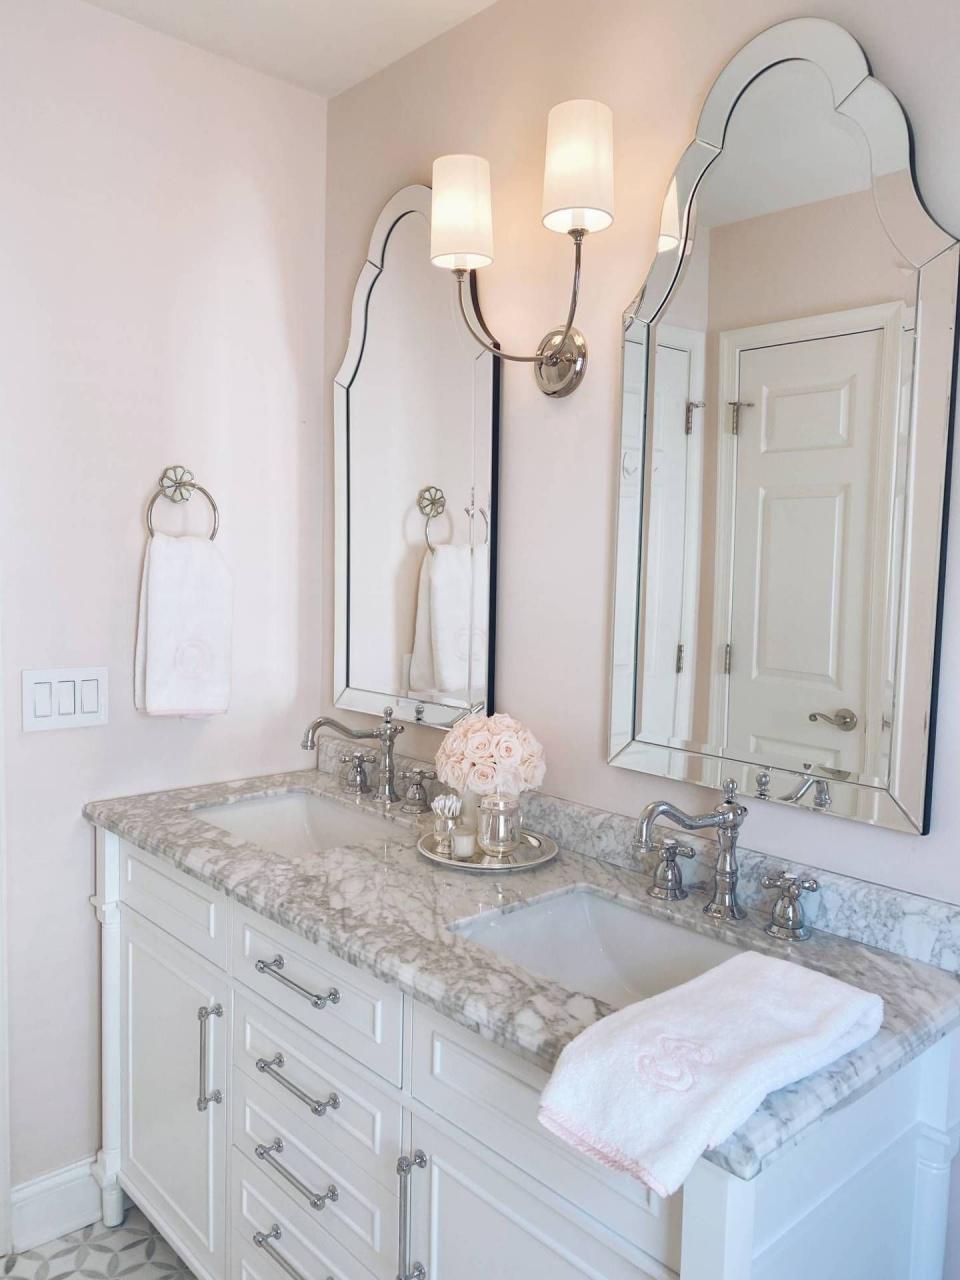 A Pink Girls Bathroom Remodel The Pink Dream Girl bathroom decor